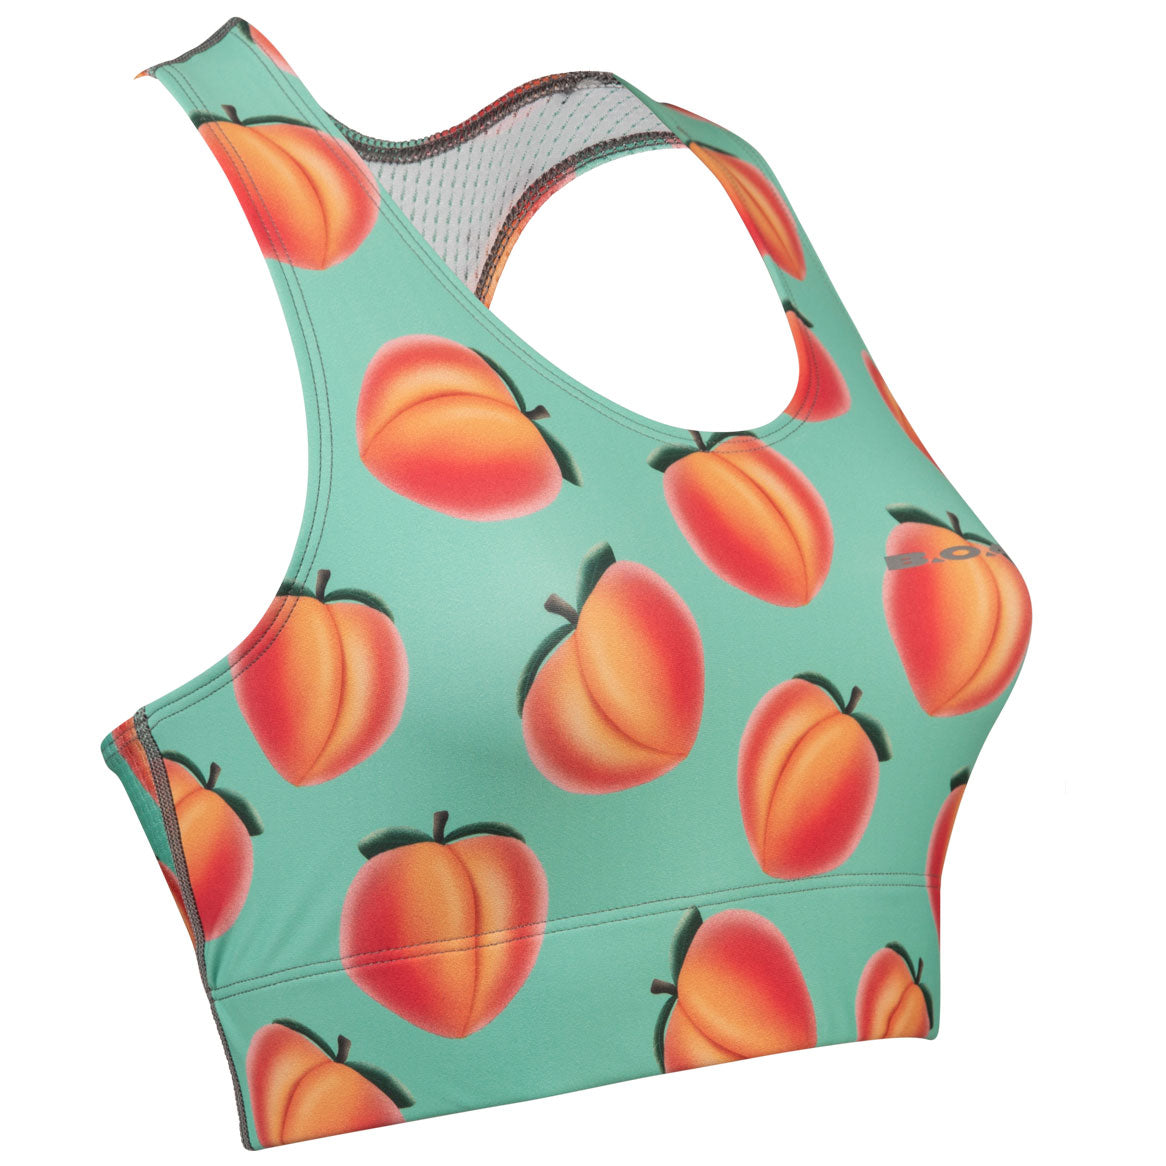 Buy Peach Bras for Women by VIRAL GIRL Online